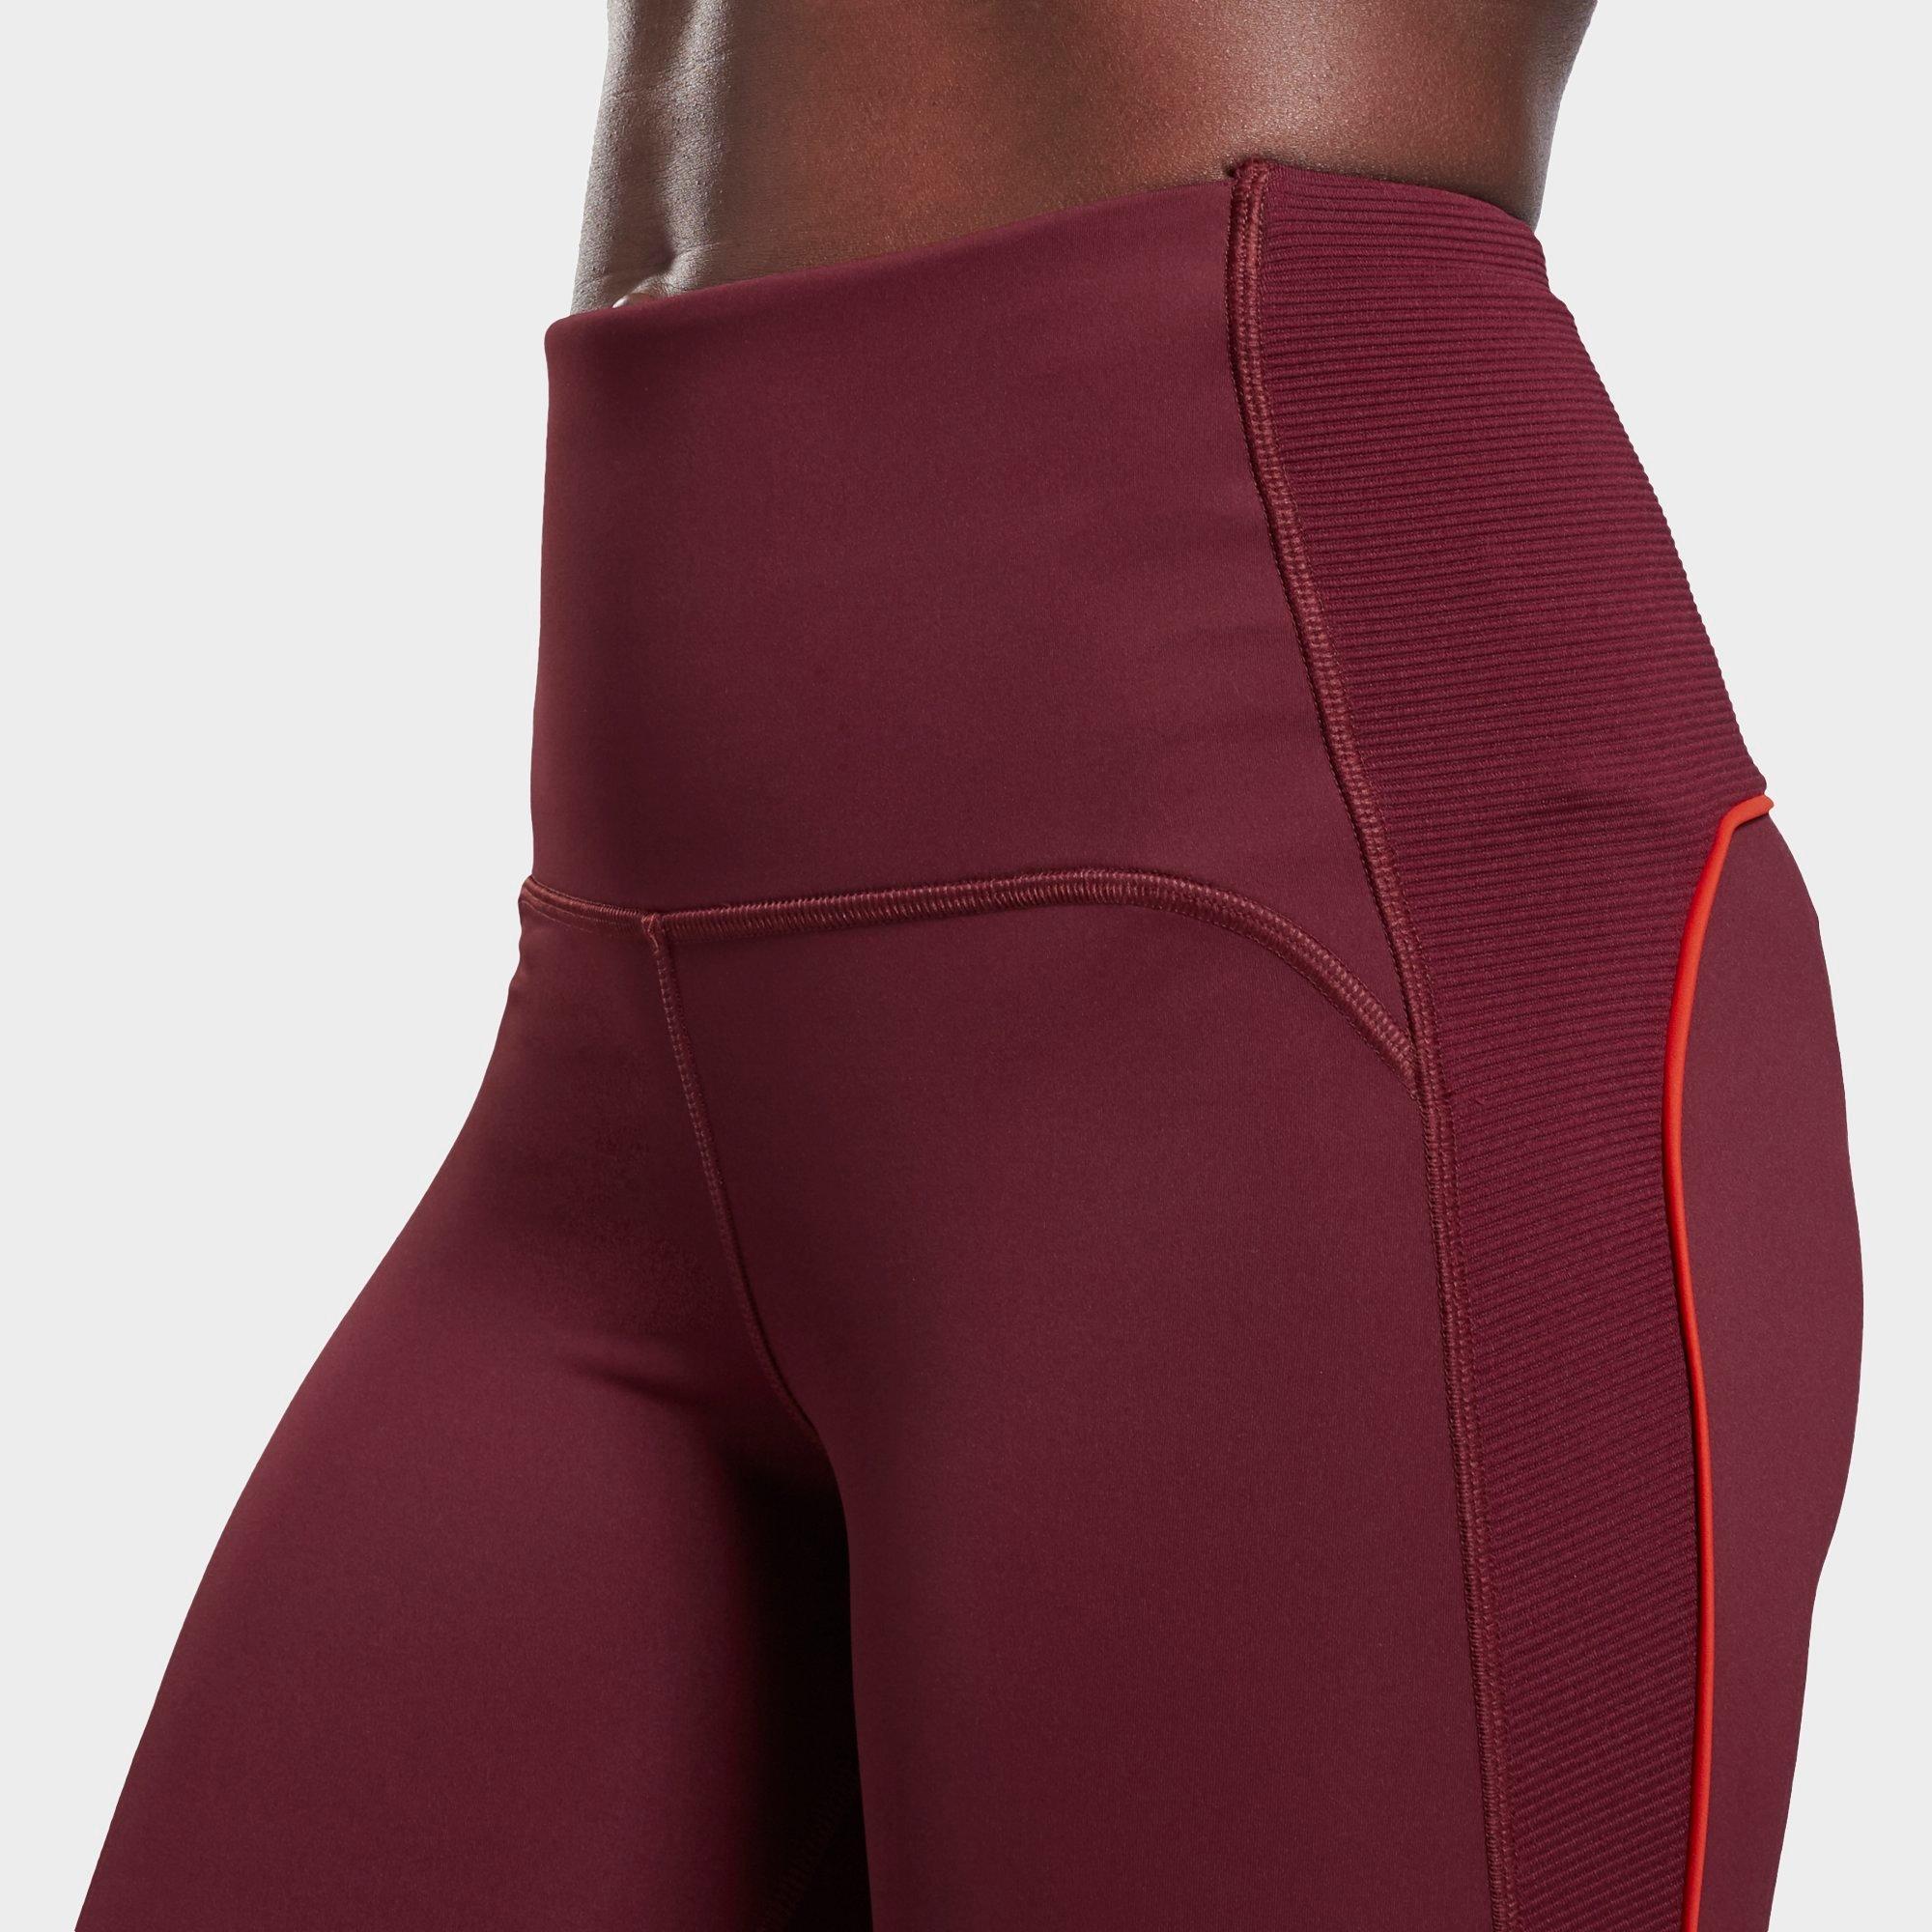 maroon bike shorts